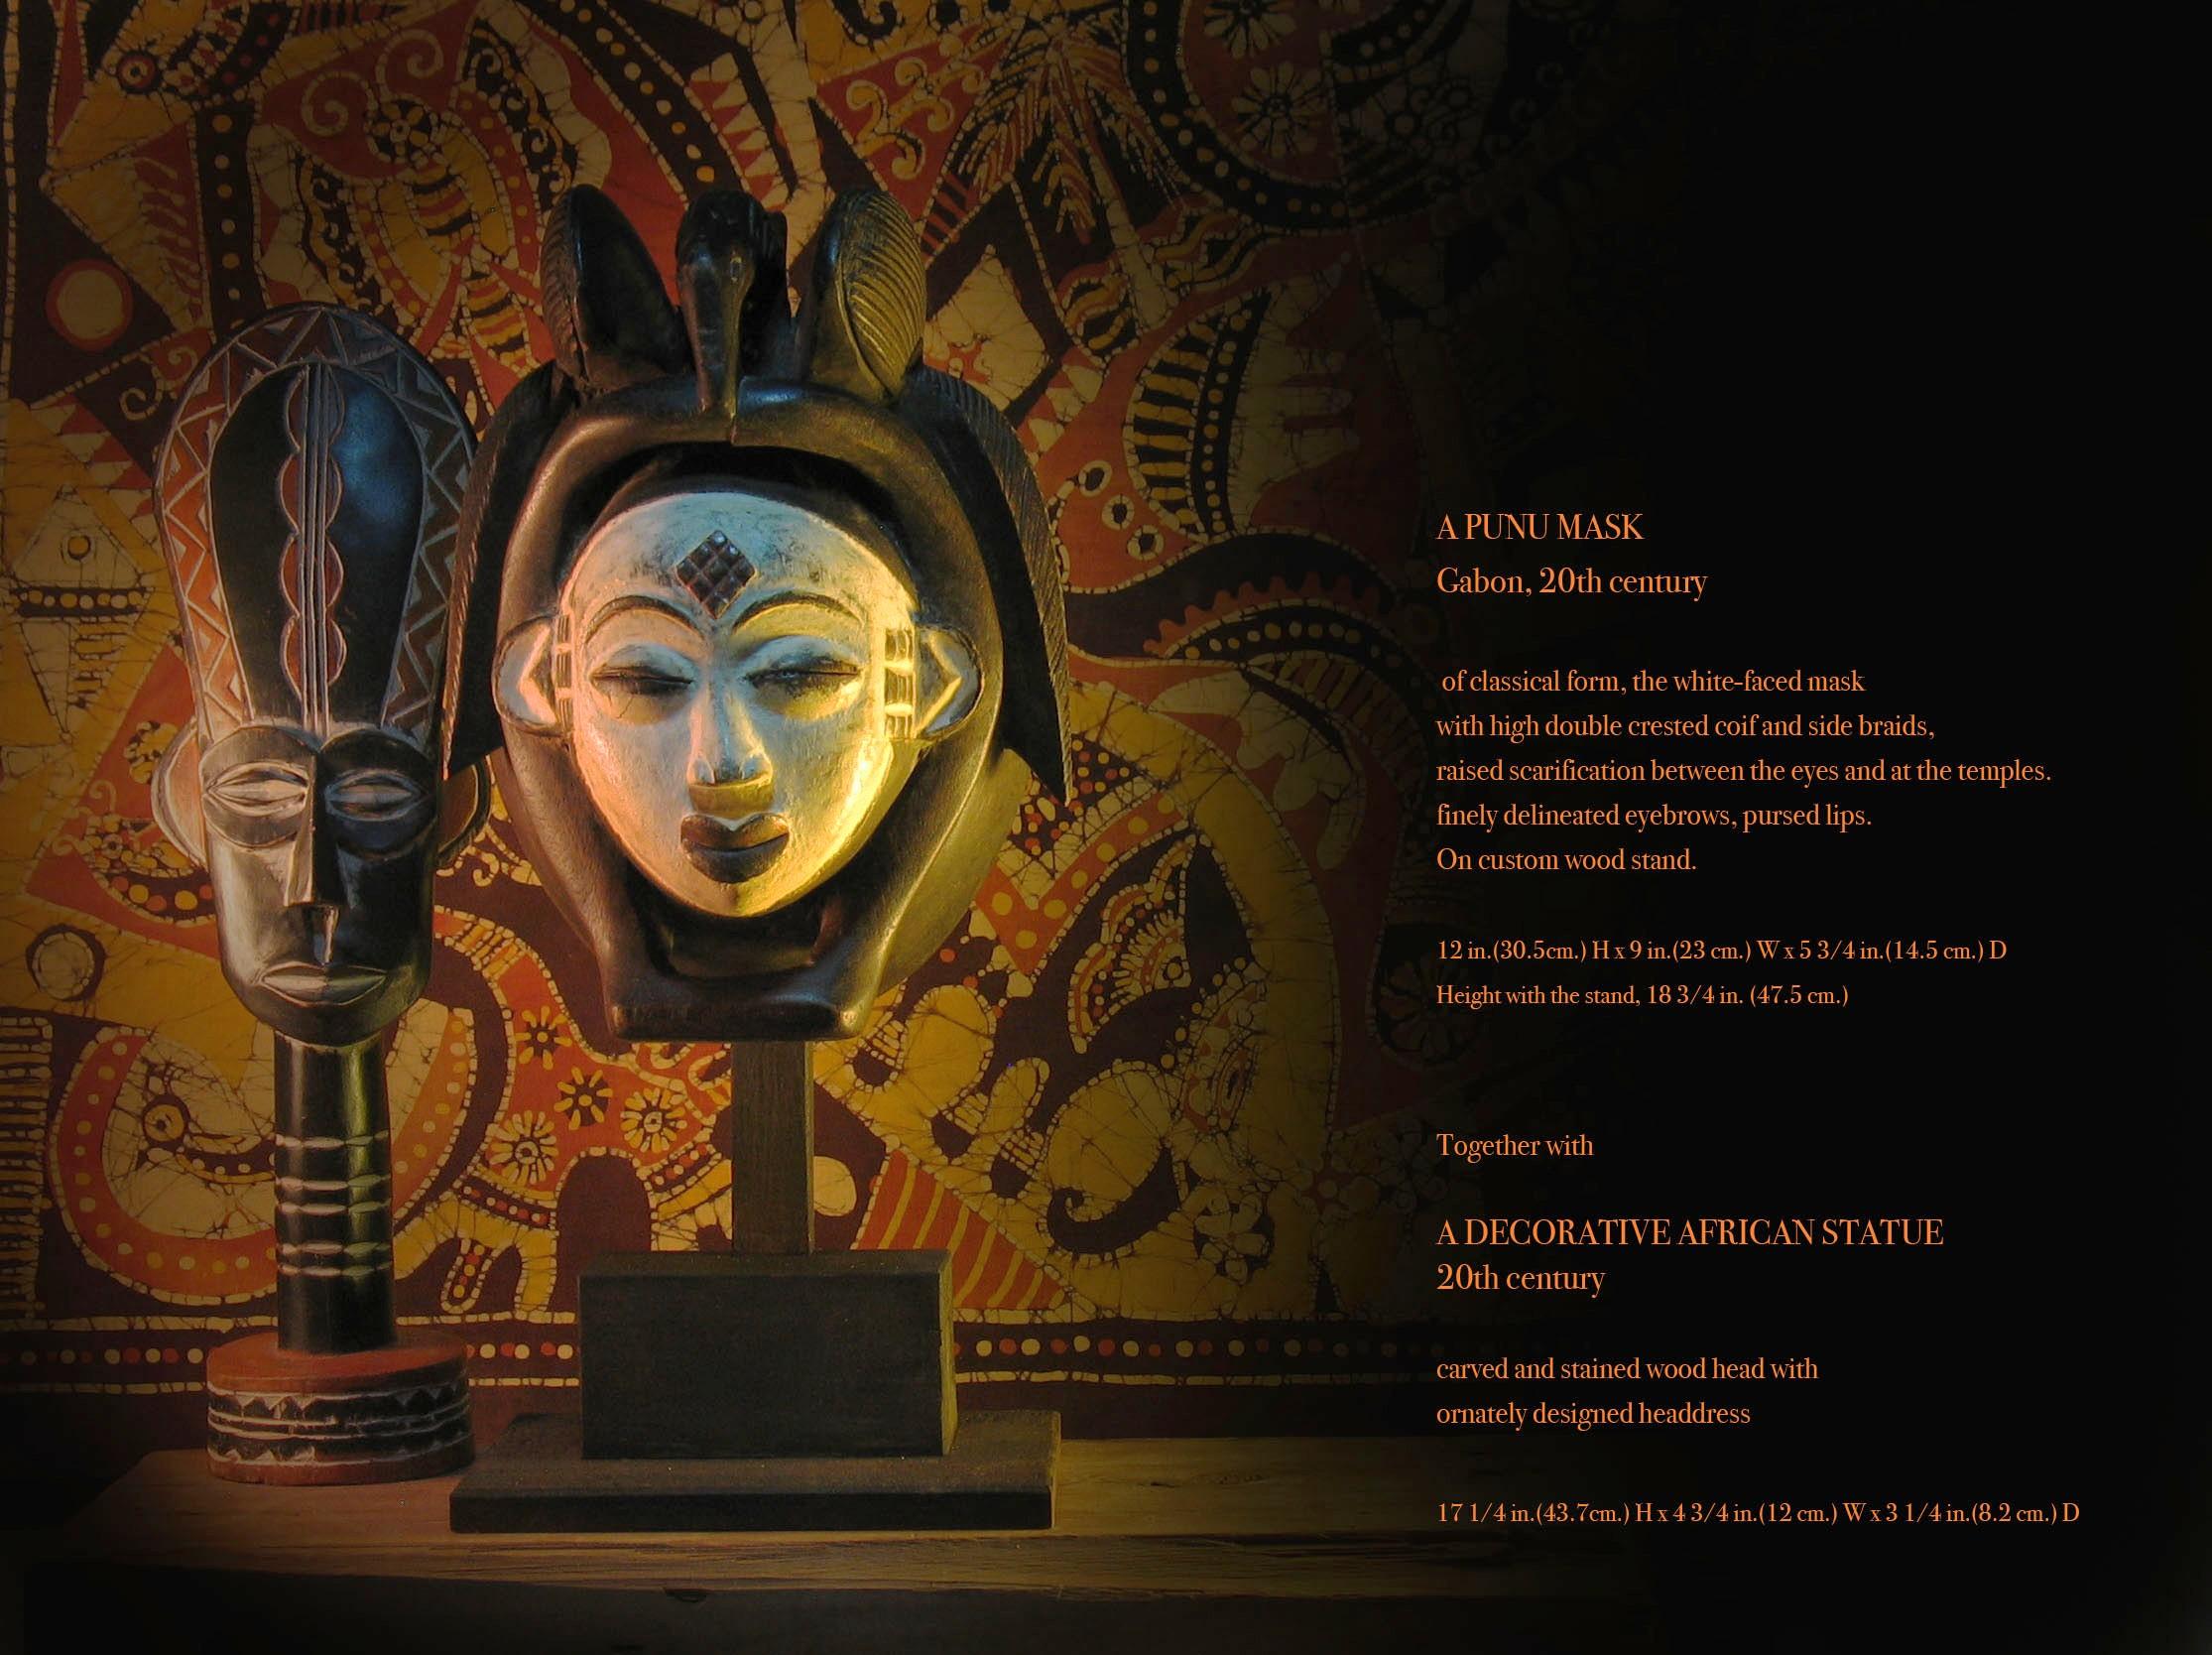 Punu Mask Gabon 20th Century with Decorative African Statue 20th Century 5